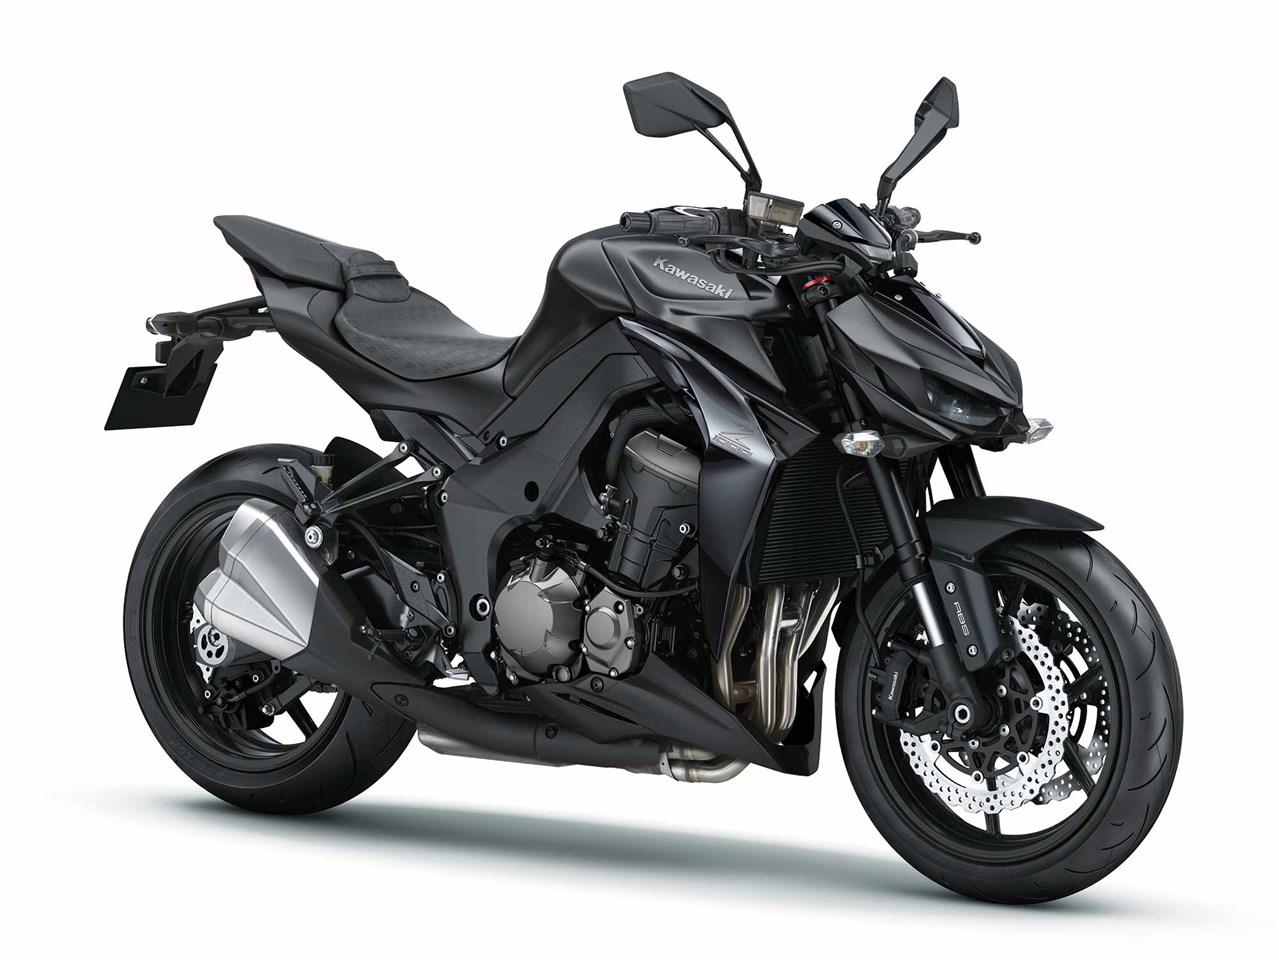 Pedir prestado crítico Complaciente Kawasaki Z1000 (2014-on) Review | Speed, Specs & Prices | MCN